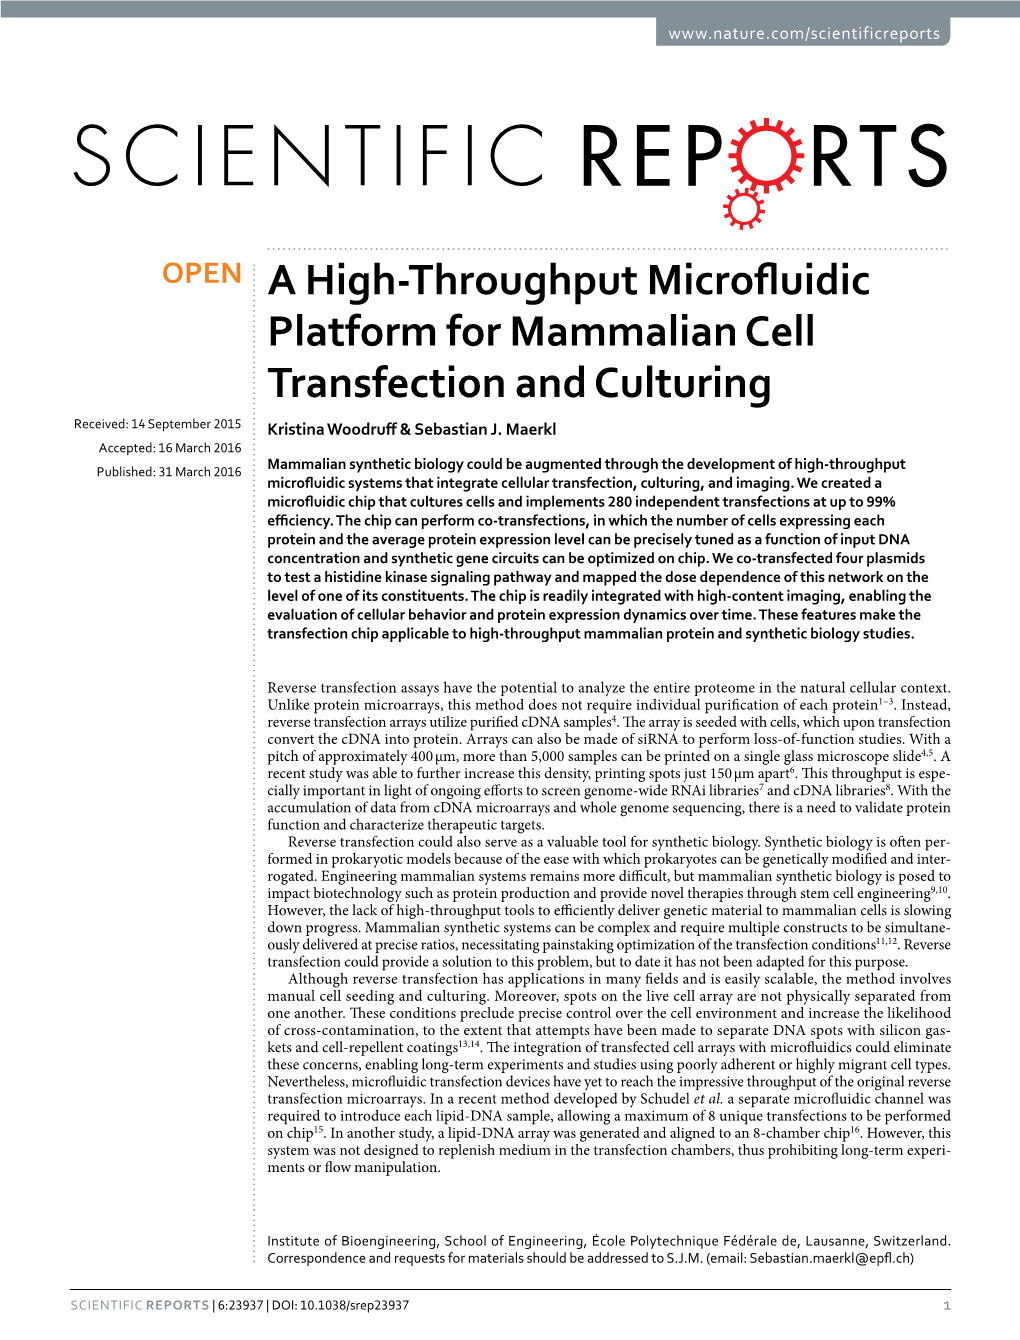 A High-Throughput Microfluidic Platform for Mammalian Cell Transfection and Culturing Received: 14 September 2015 Kristina Woodruff & Sebastian J